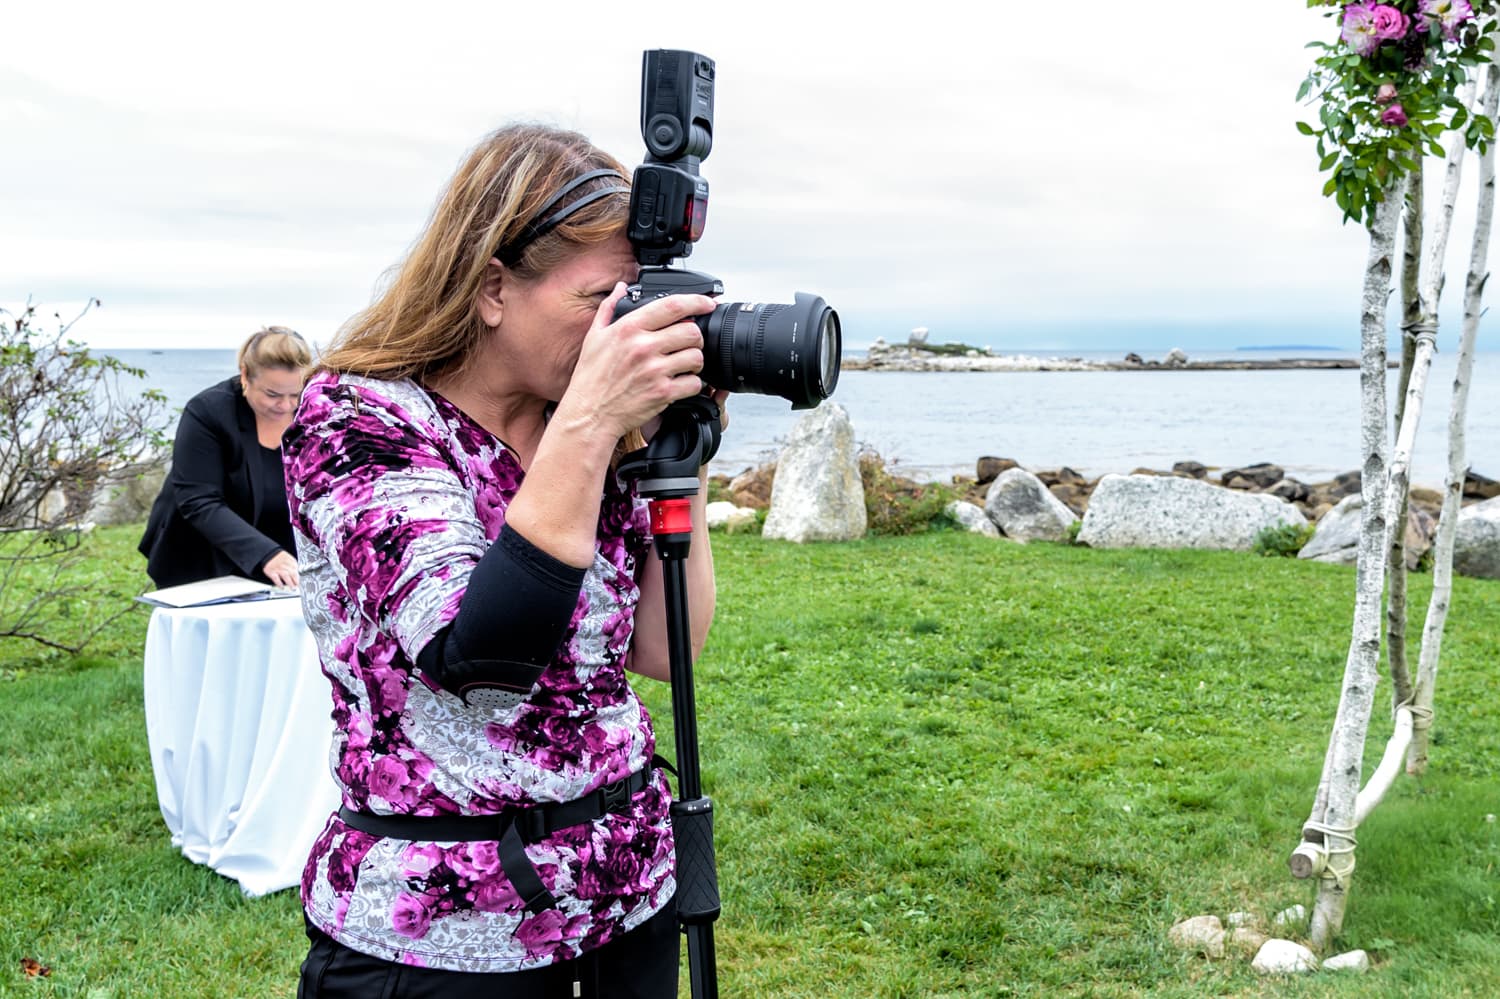 Sandra Adamson at work photographing a wedding ceremony at the Oceanstone resort in Nova Scotia.